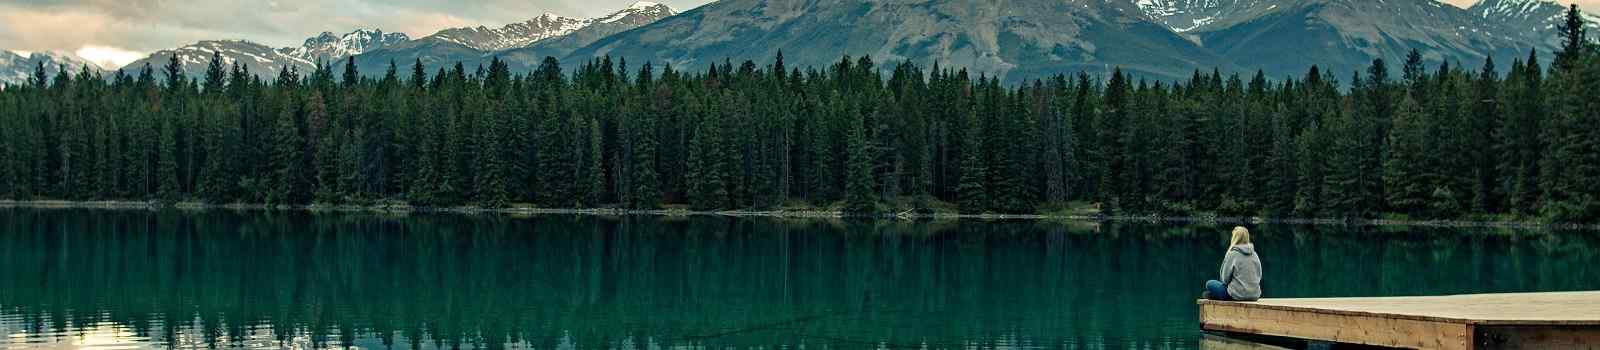 WILD-WEST Enjoying the beautiful landscape by Annette Lake in Jasper National Park  Canadashutterstock 530657062